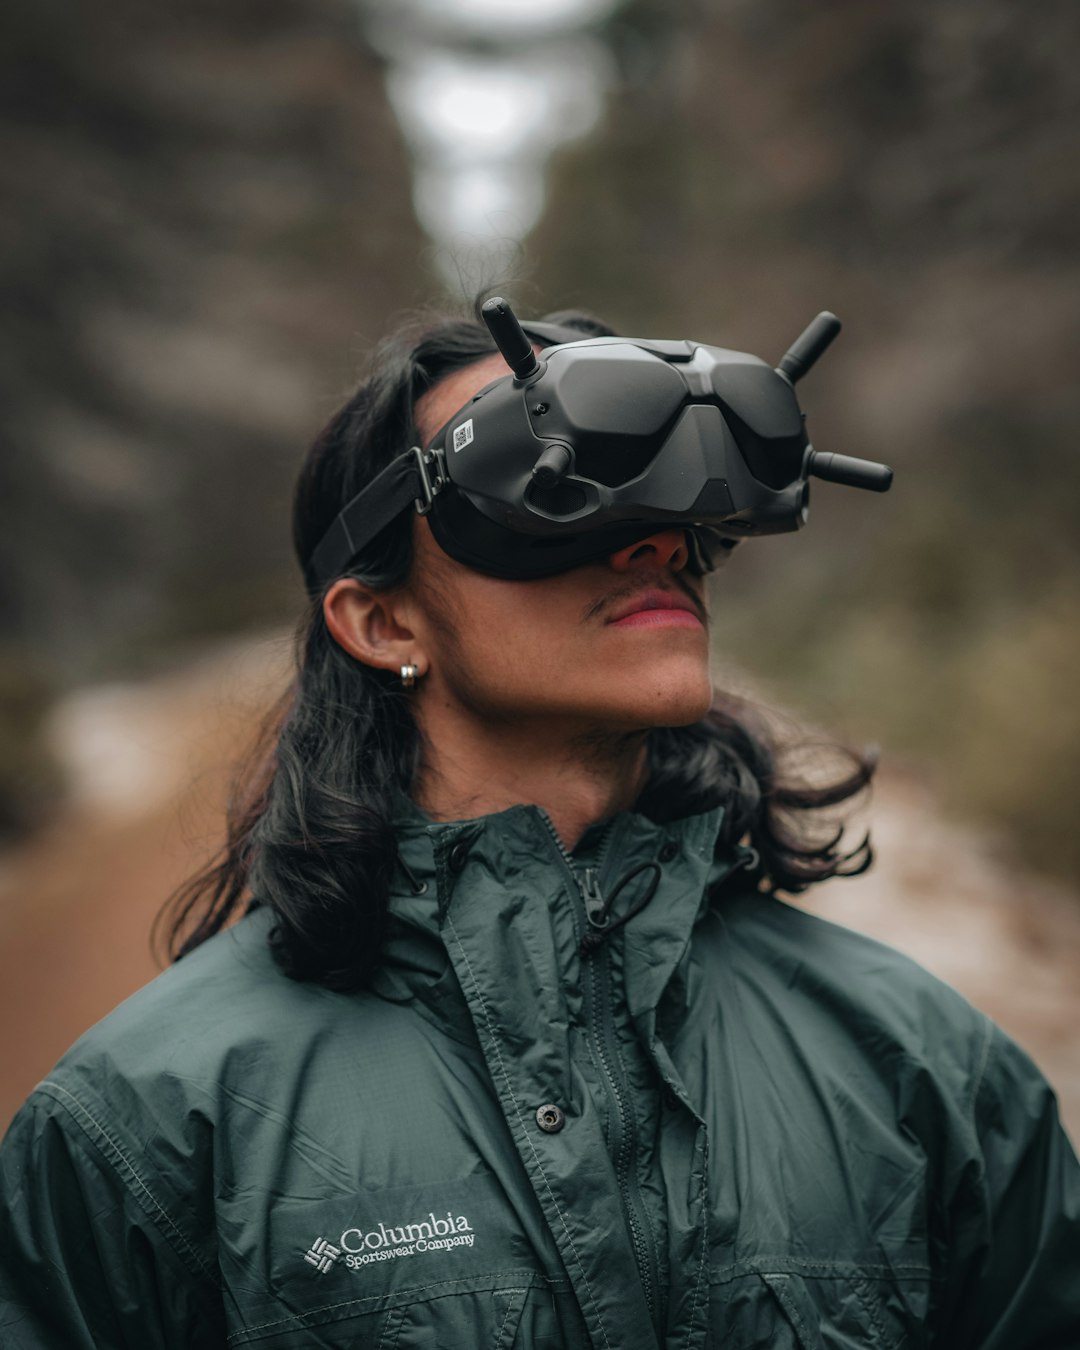 Virtual Reality Education